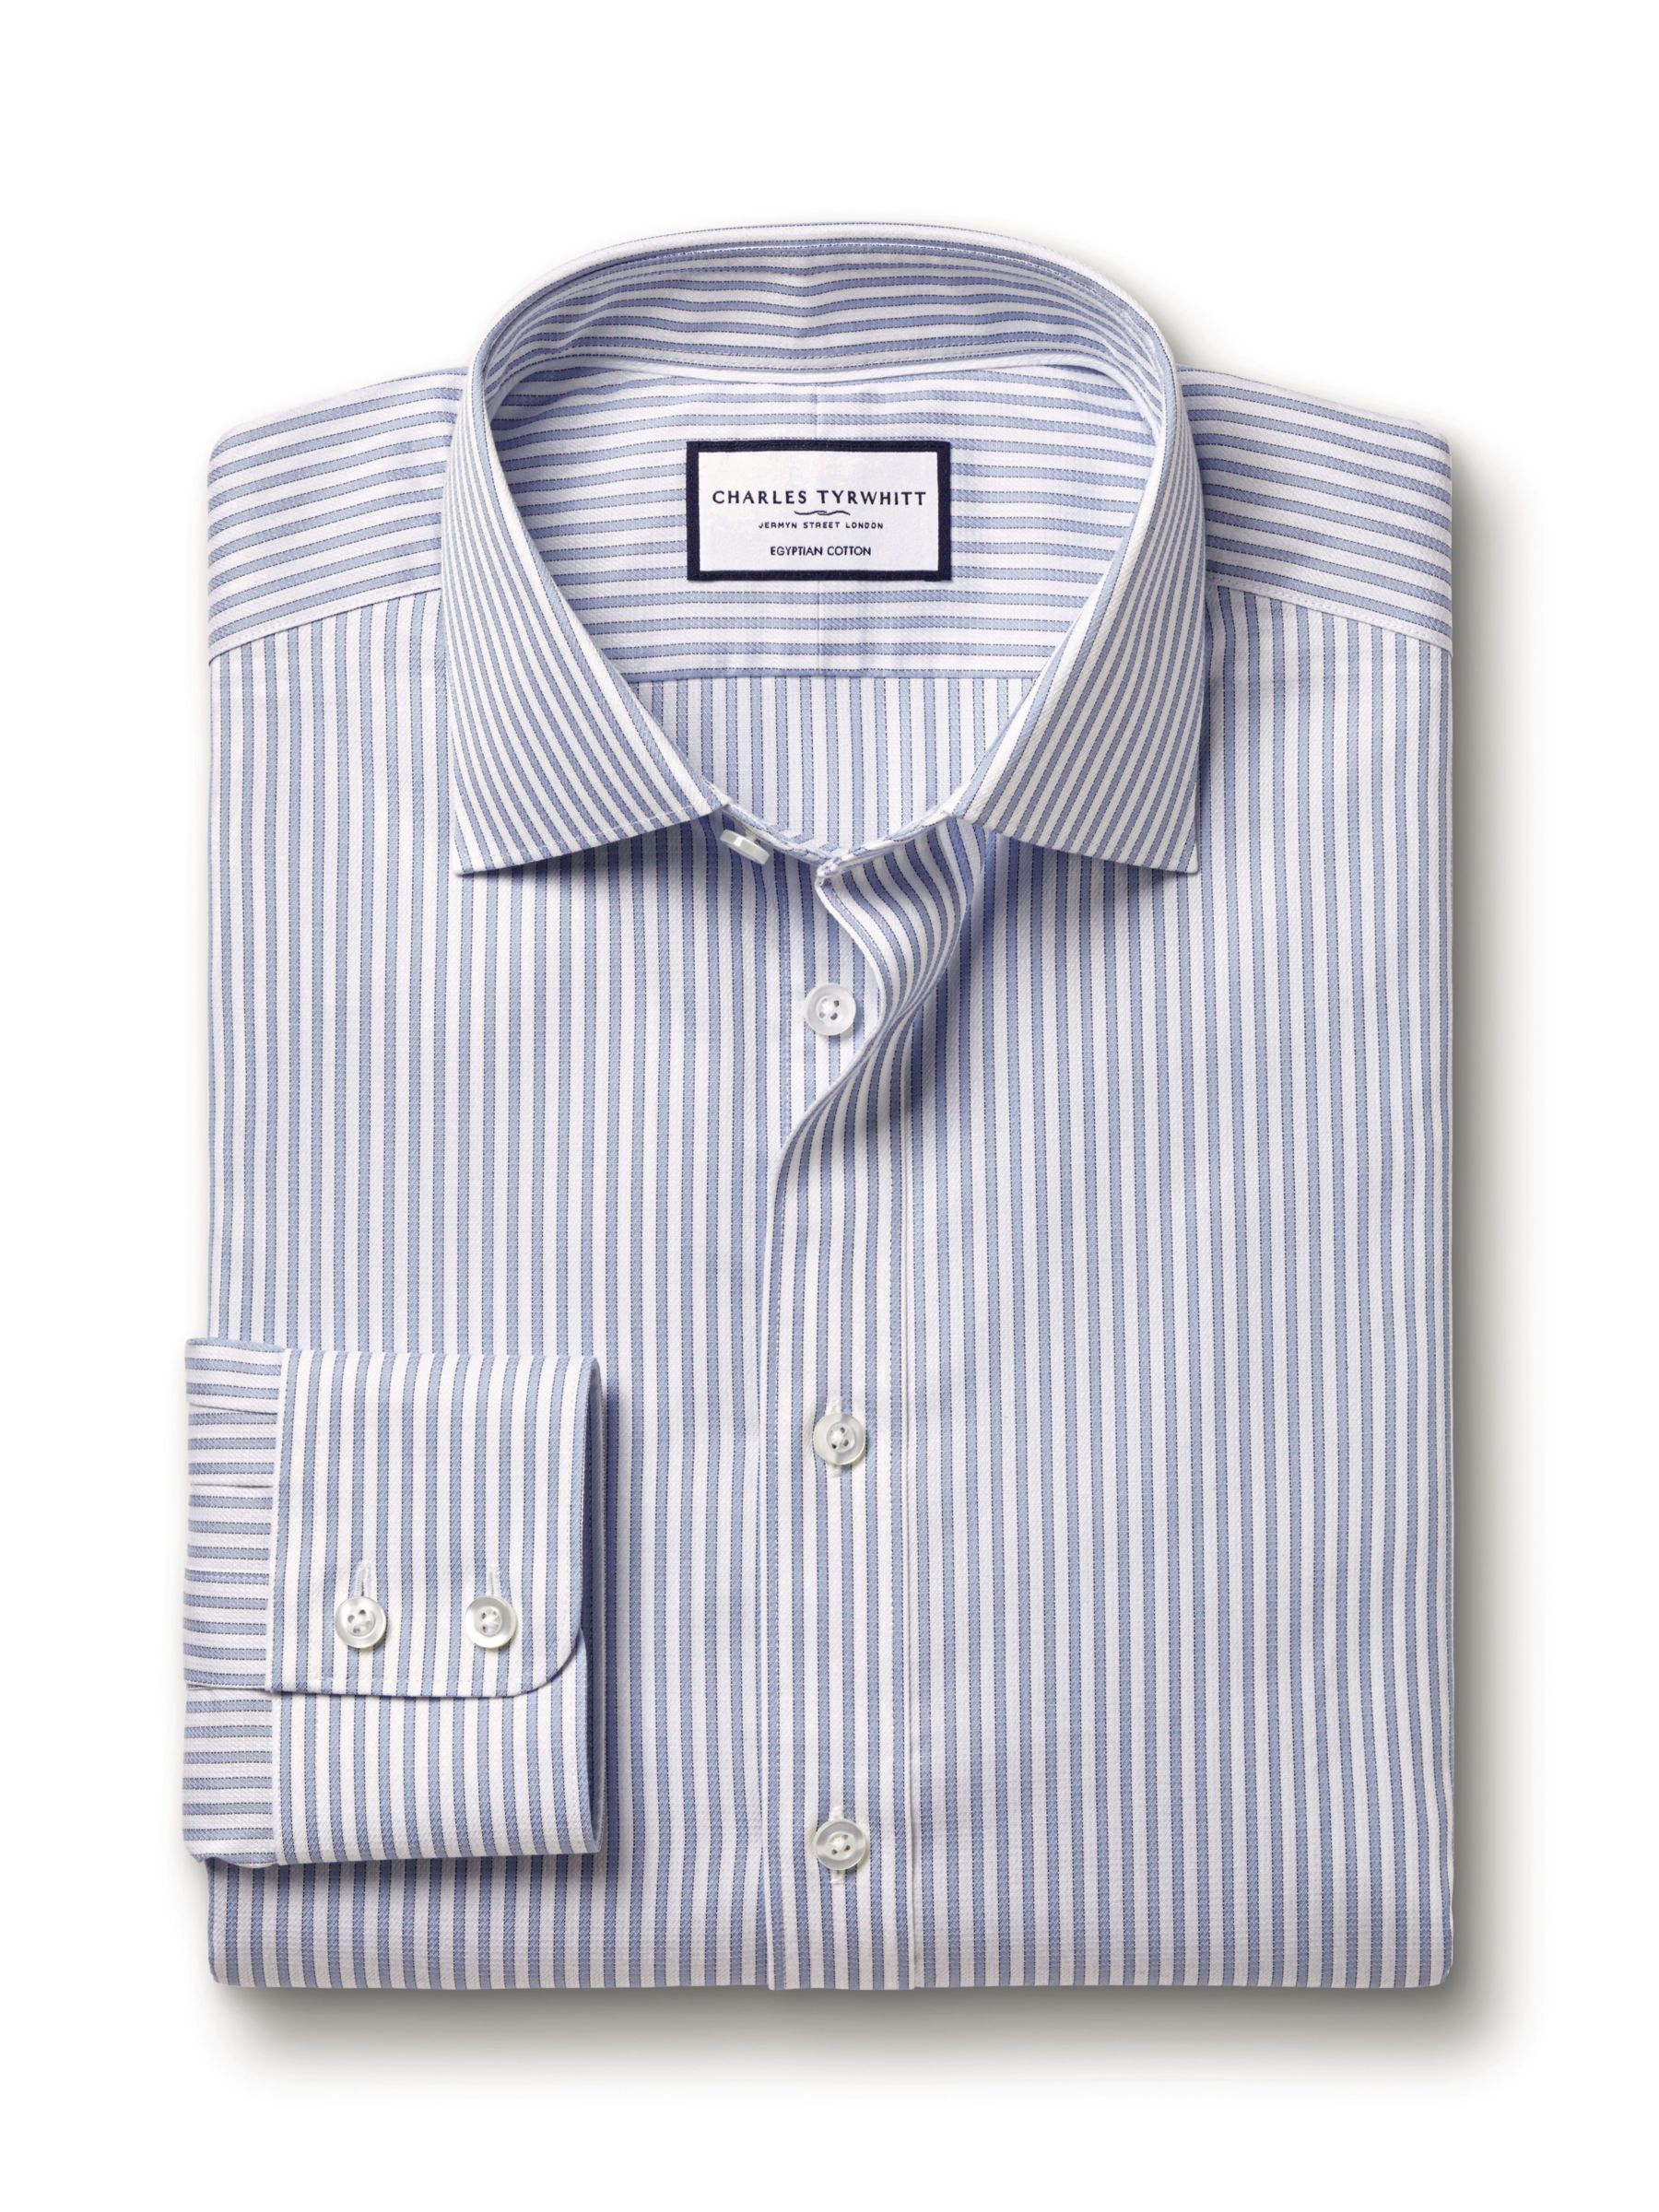 Charles Tyrwhitt Stripe Cotton Twill Shirt, Sky Blue, 14.5 33